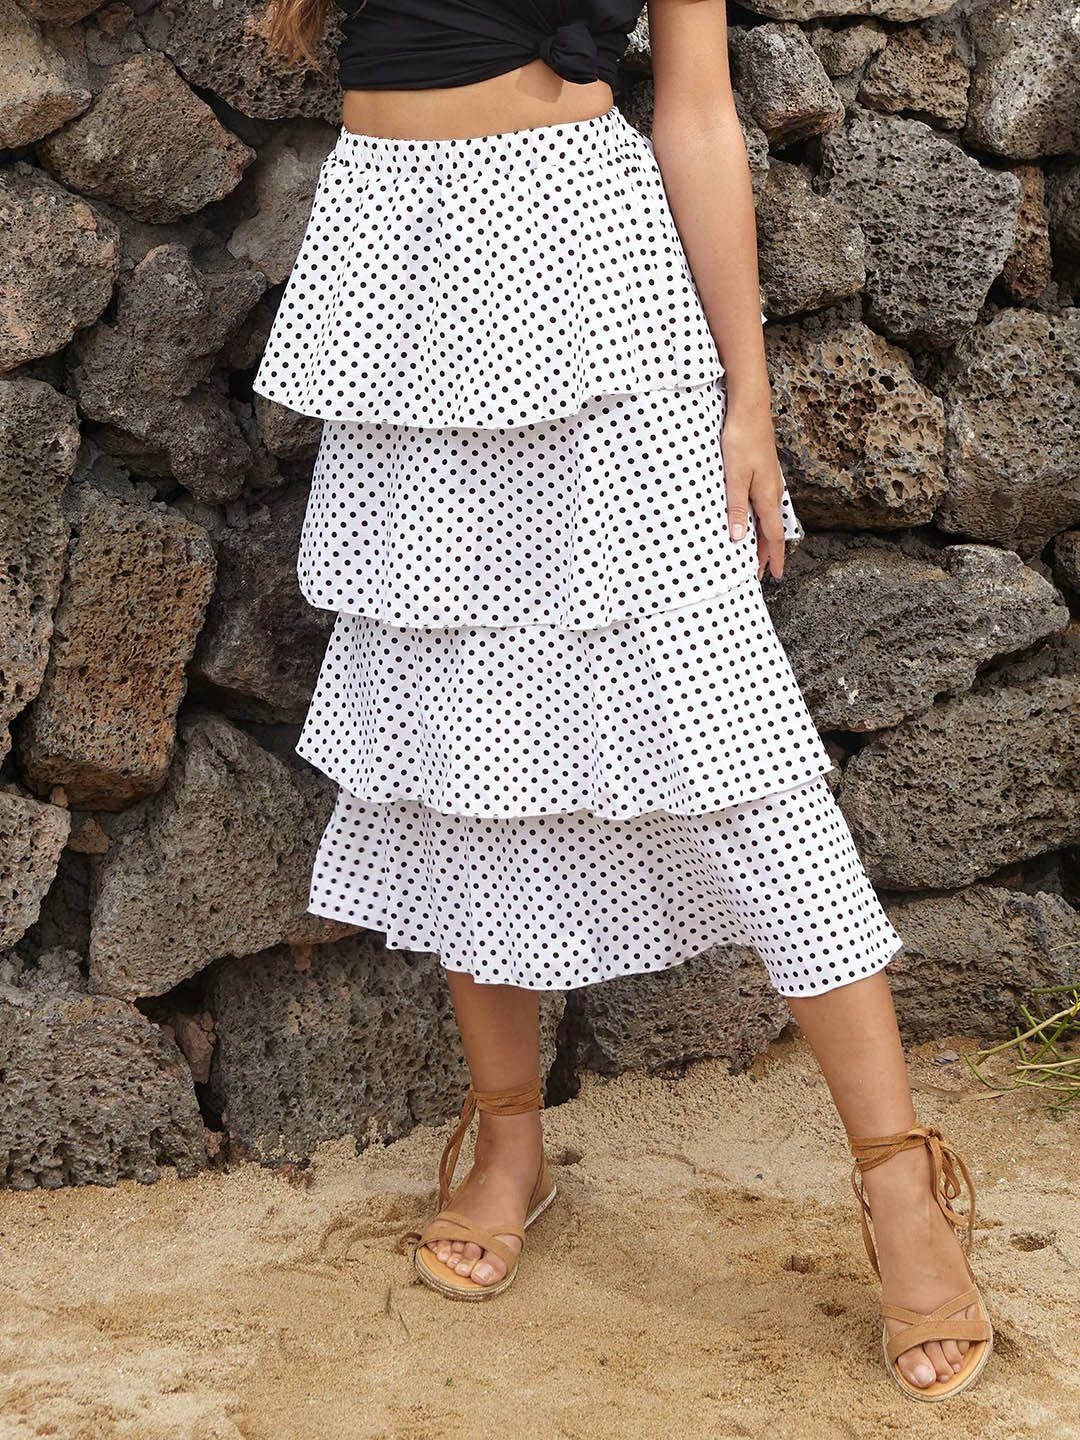 stylecast-white-polka-dots-printed-layered-midi-skirt